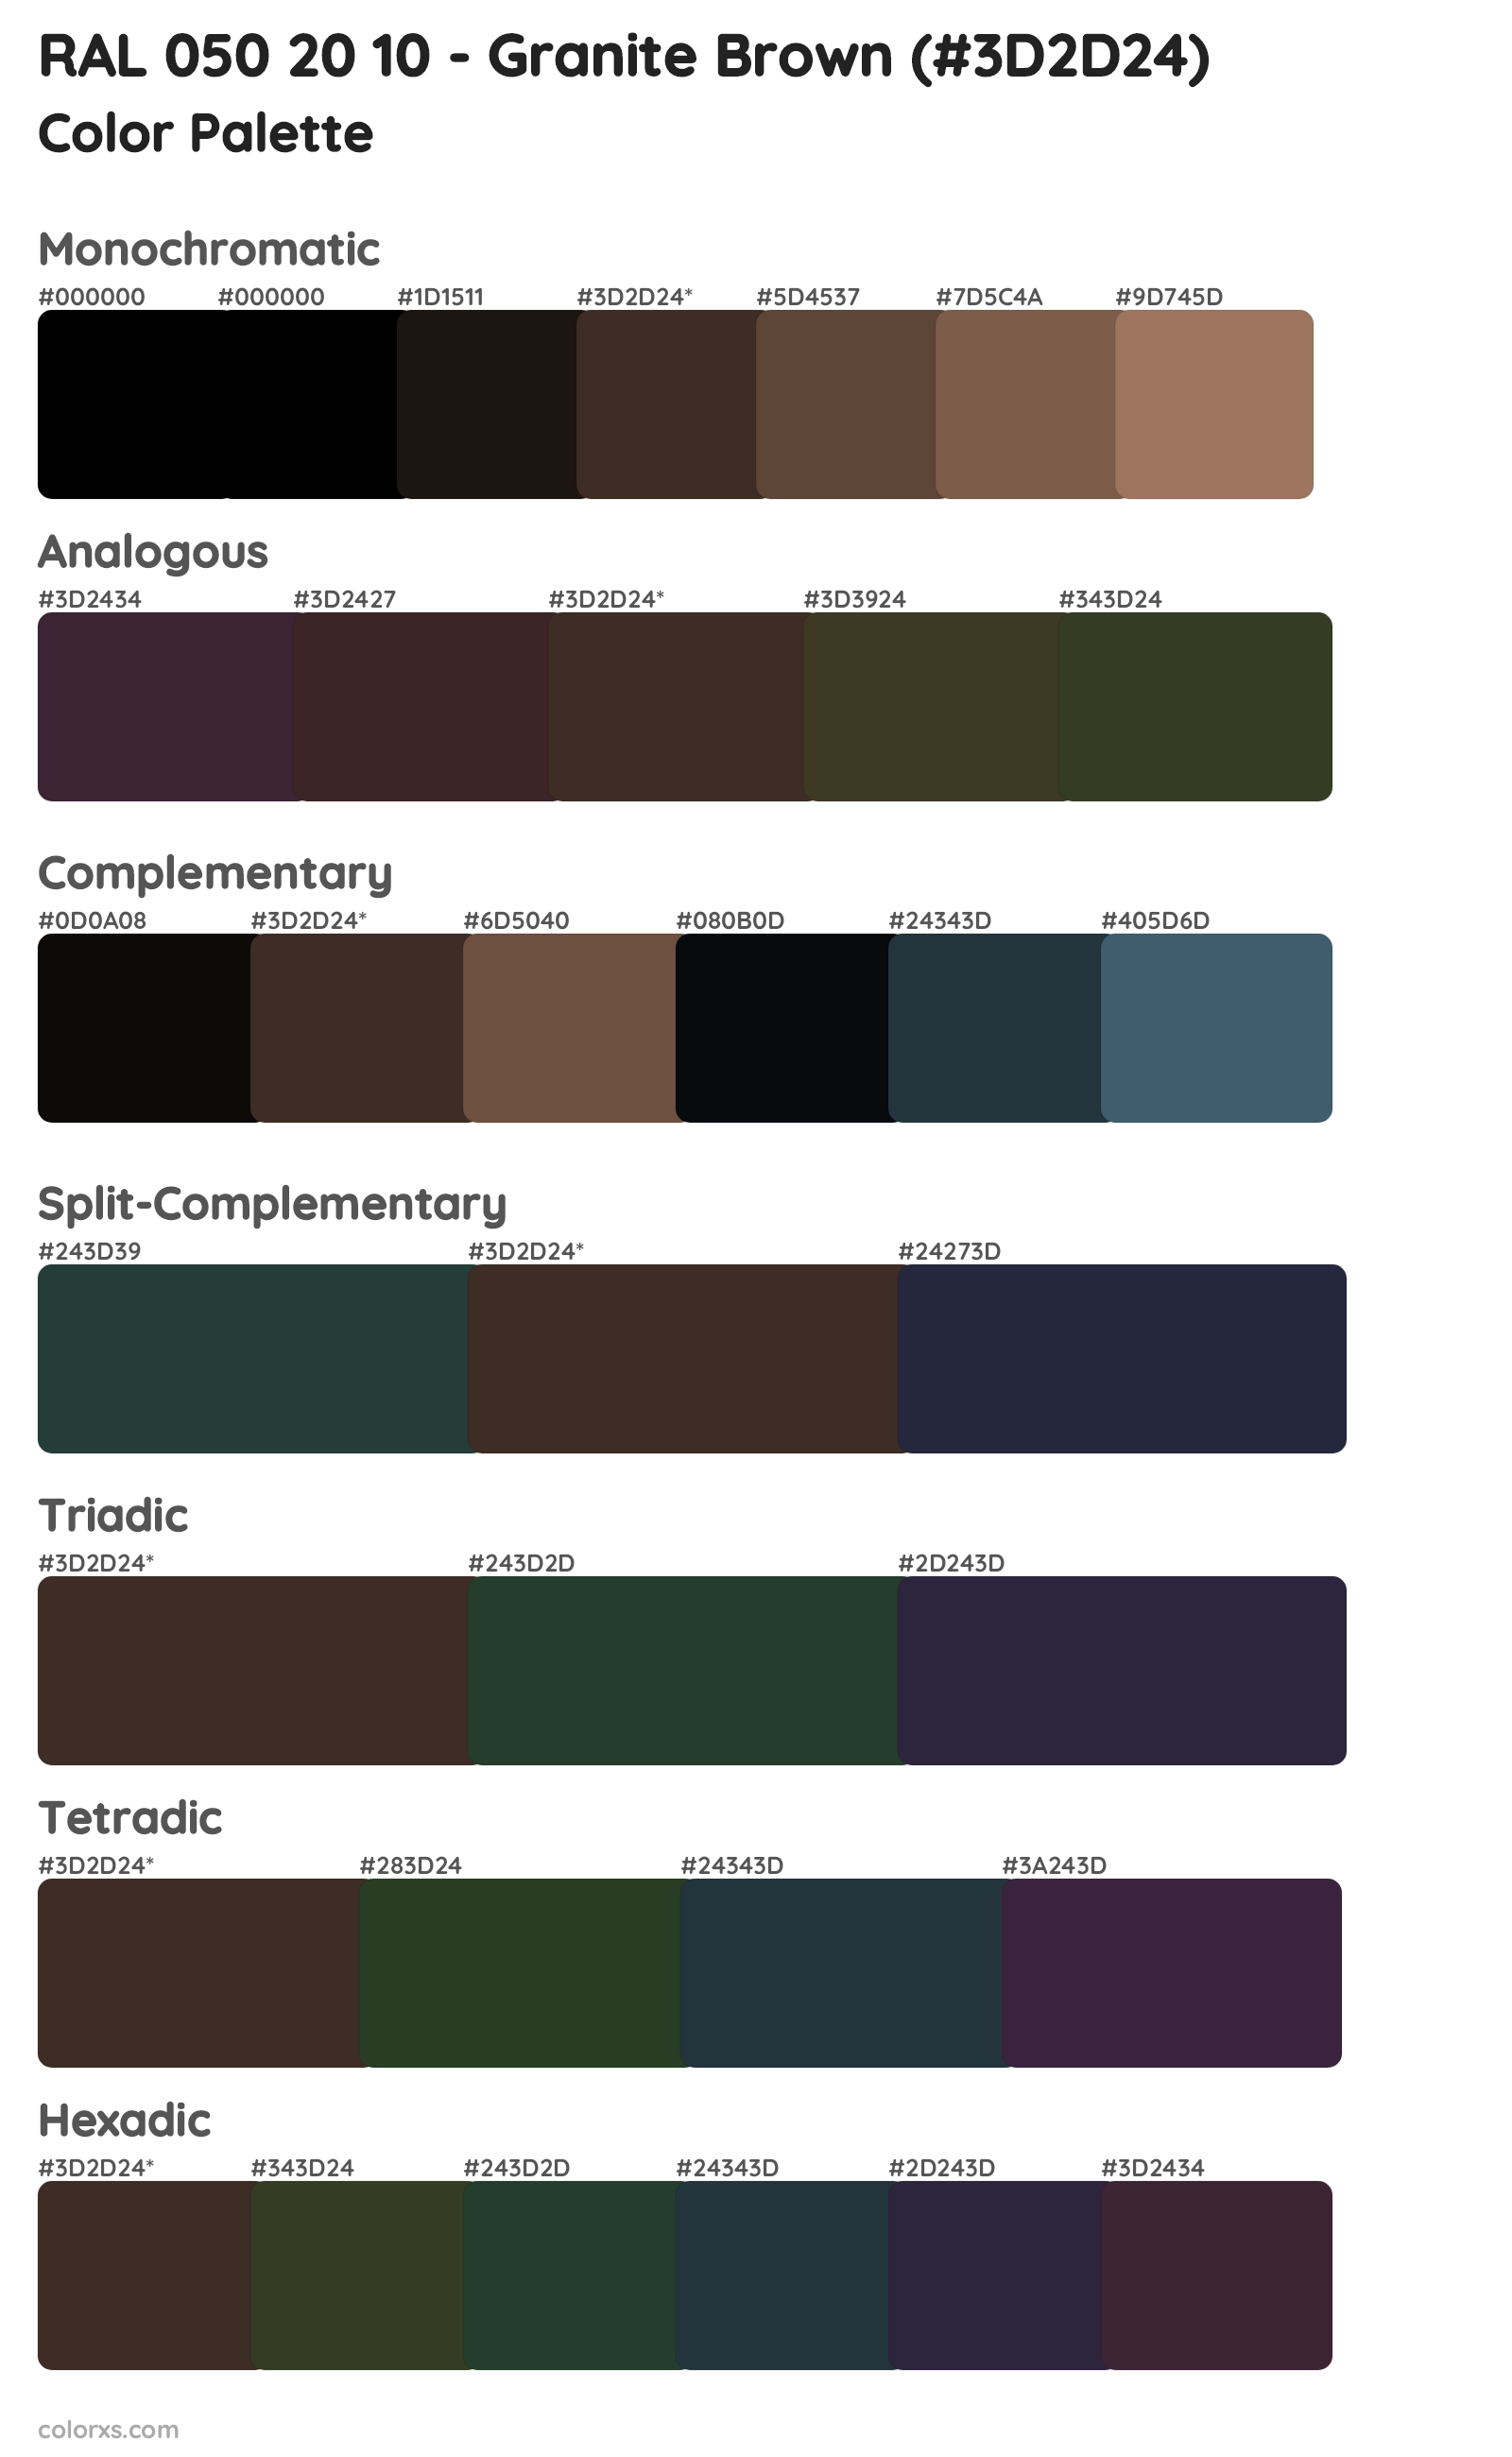 RAL 050 20 10 - Granite Brown Color Scheme Palettes